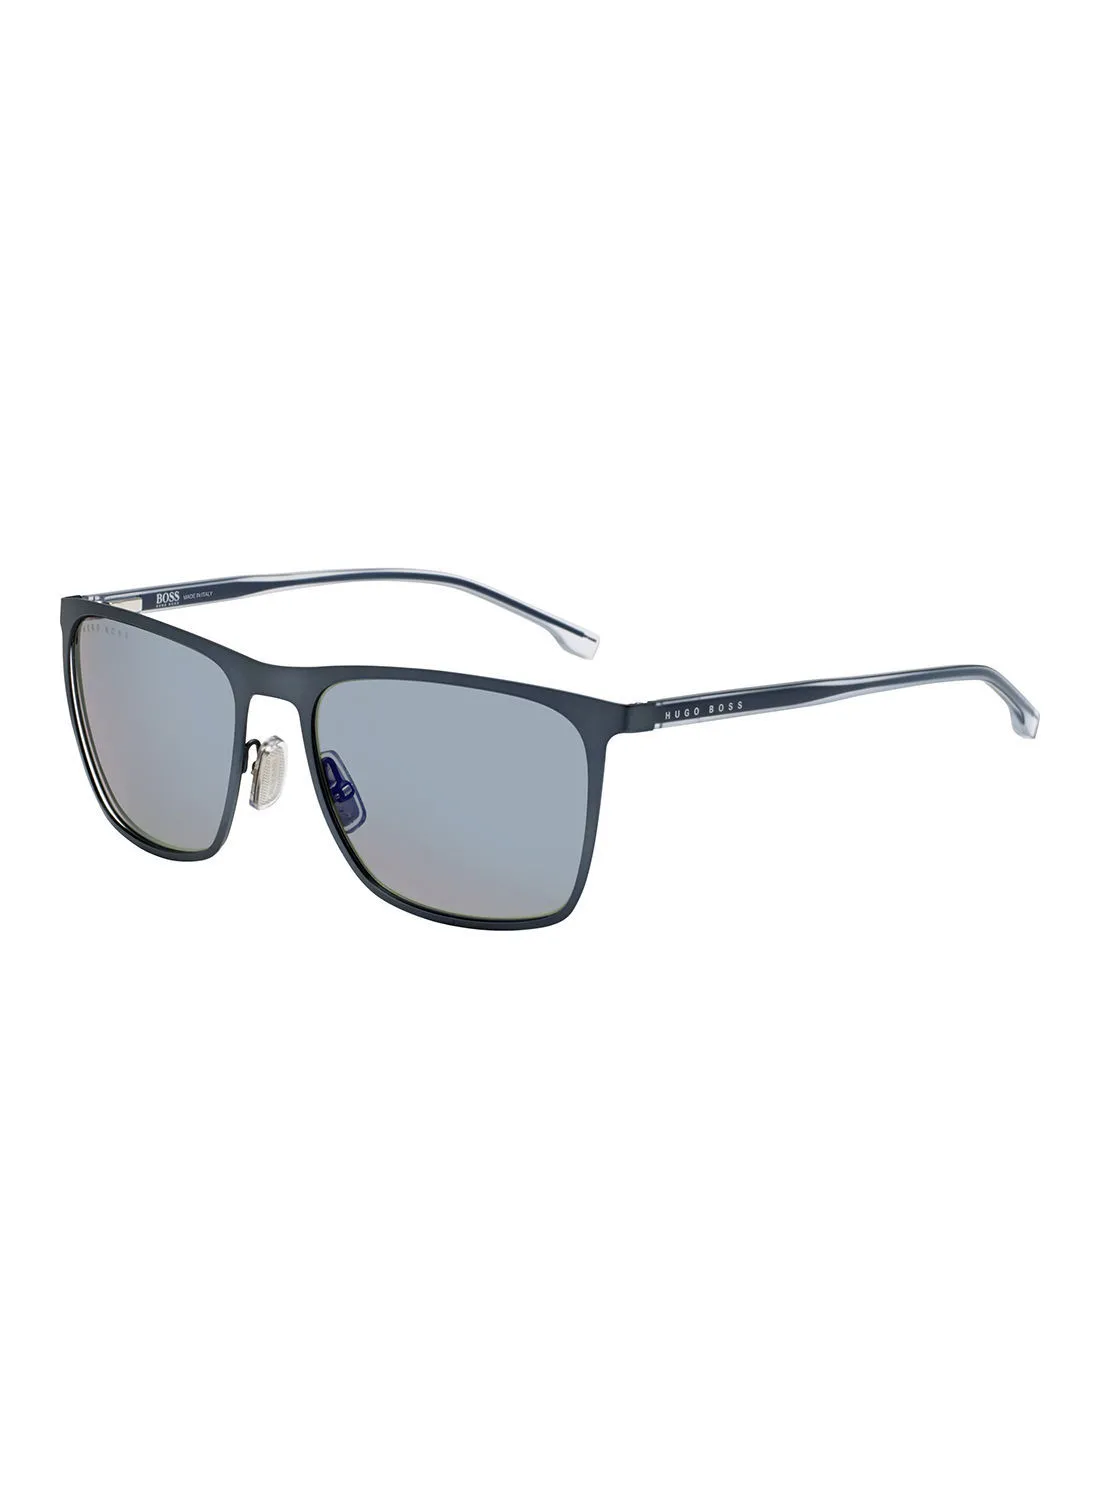 HUGO BOSS UV Protection Rectangular Eyewear Sunglasses BOSS 1149/S/IT  MTT BLUE 57